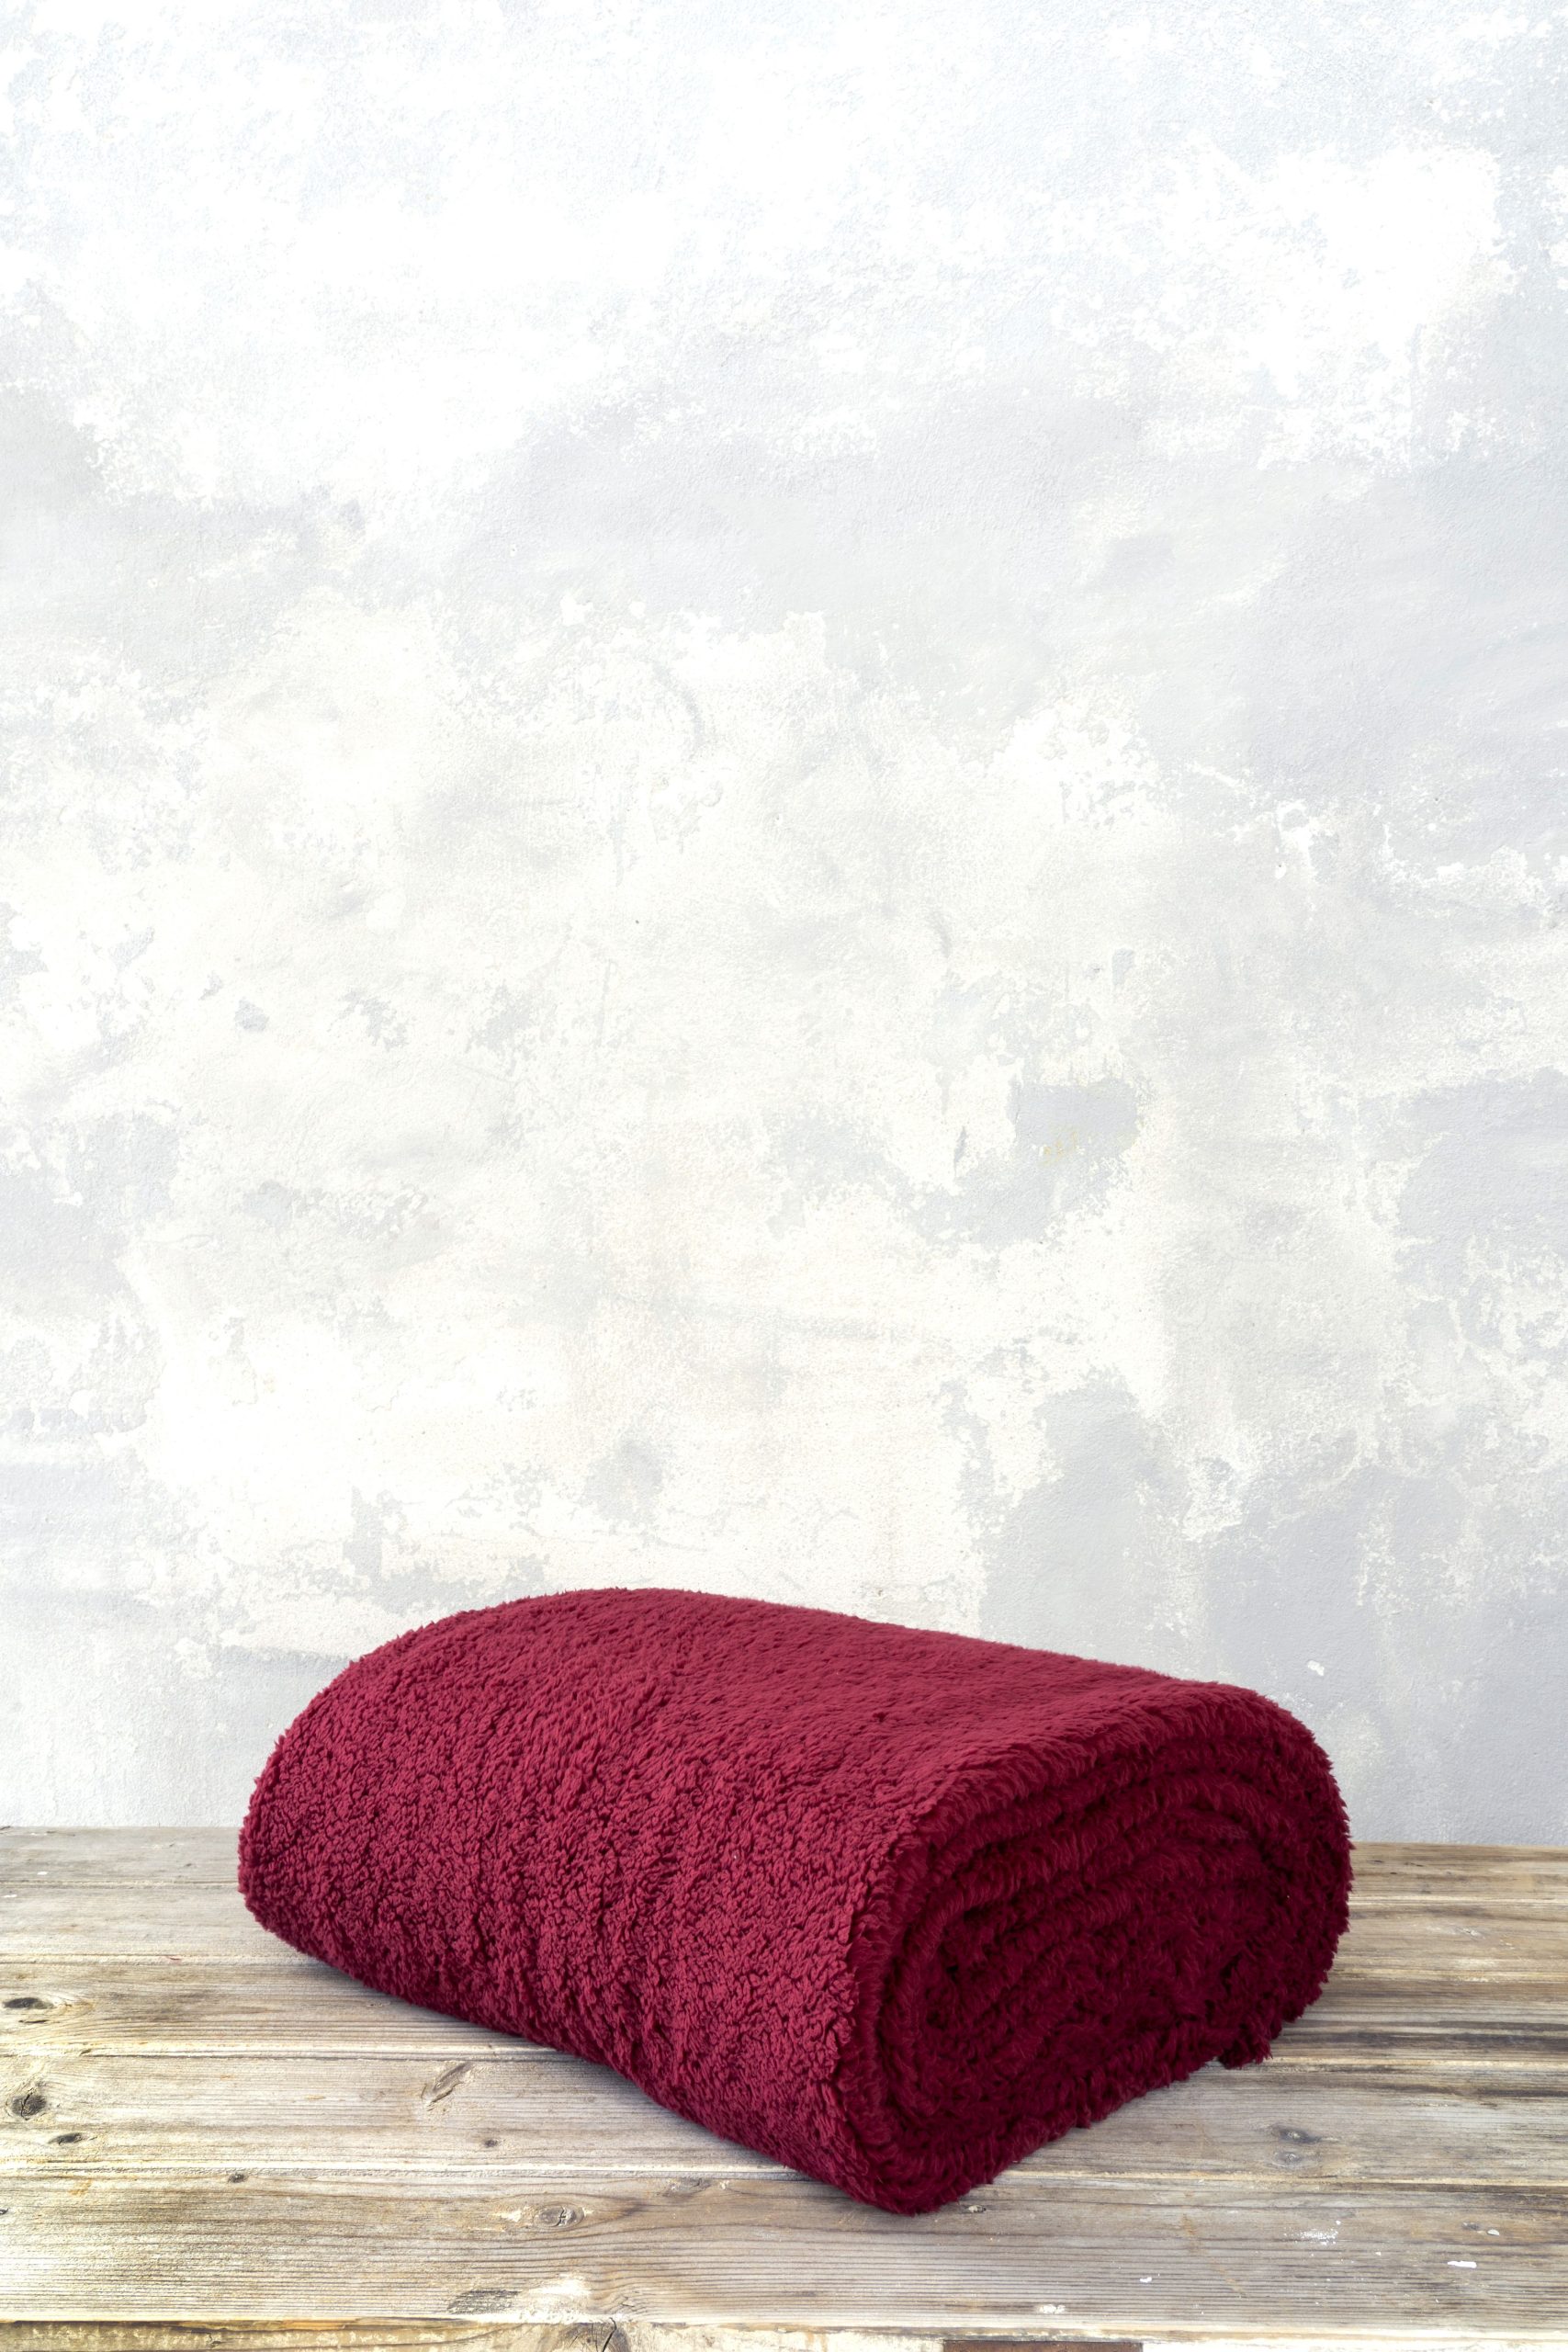 Nima Home Κουβέρτα Μονή 150×220 – Manta Wine Red Μπορντώ